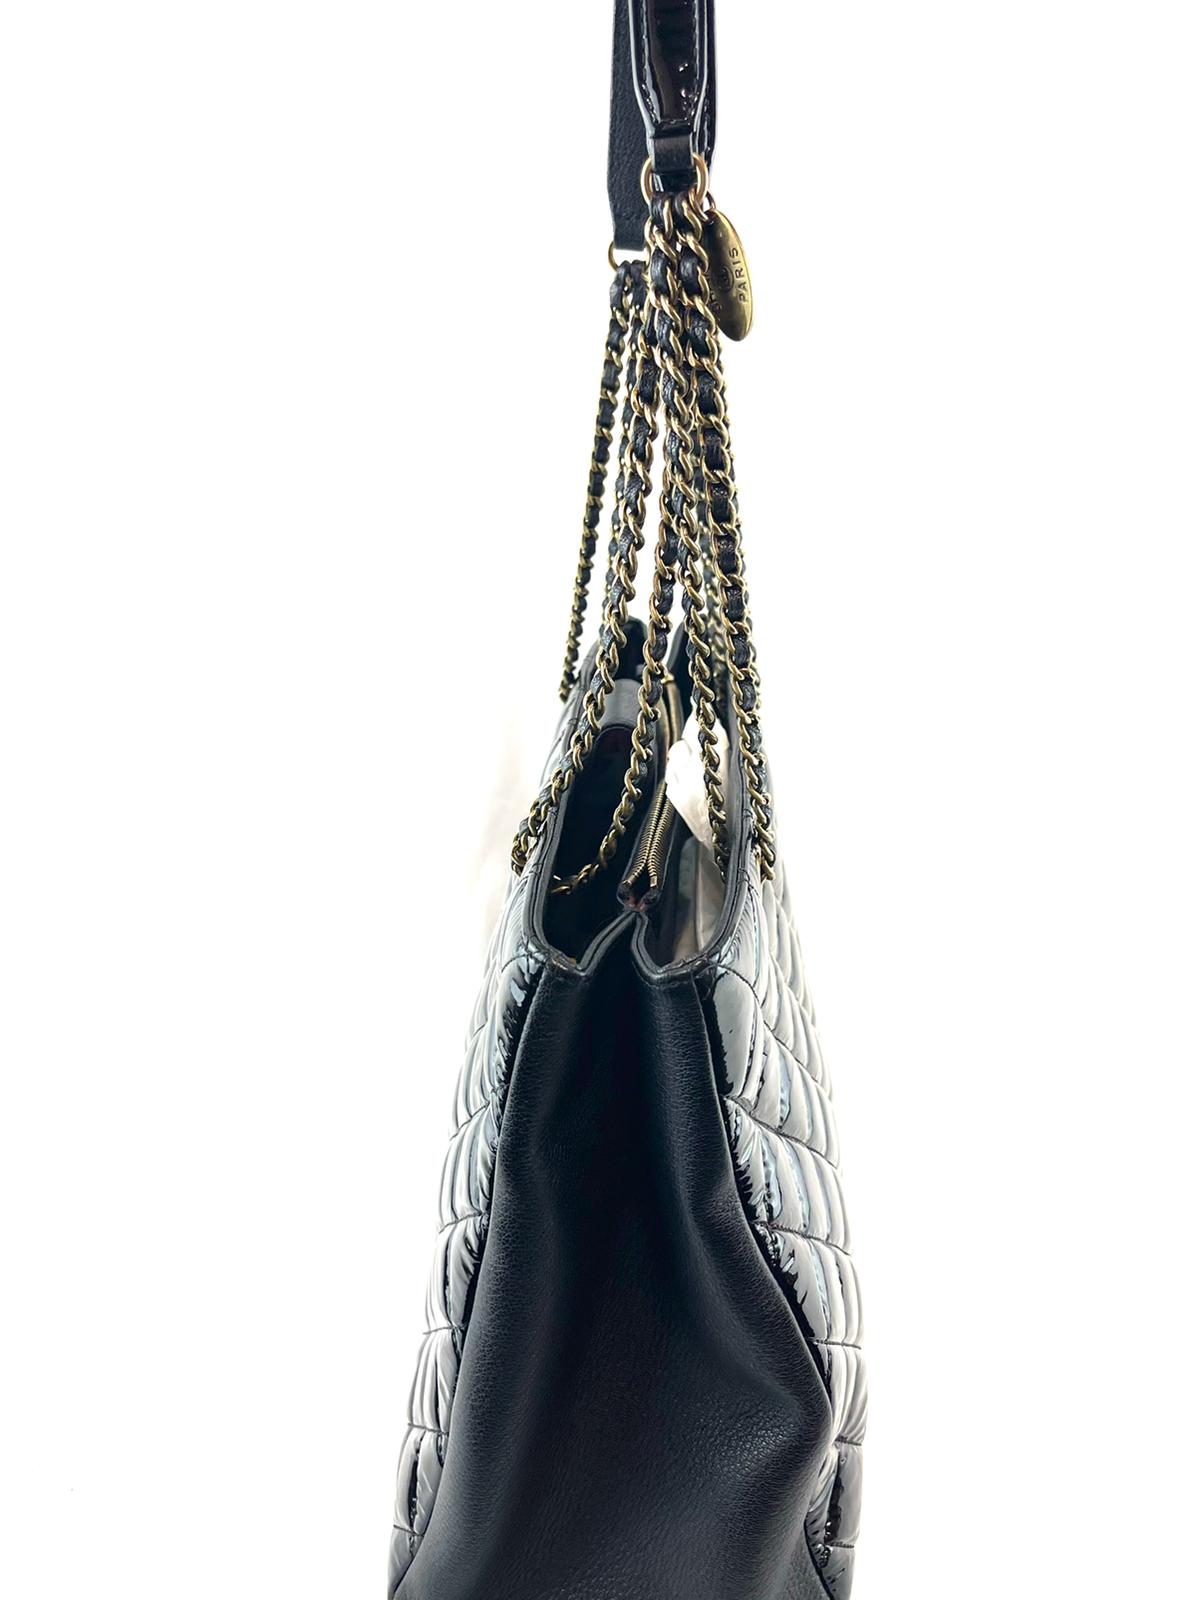 Chanel Black Quilted Patent Leather Shoulder Bag Q6B05927KB009